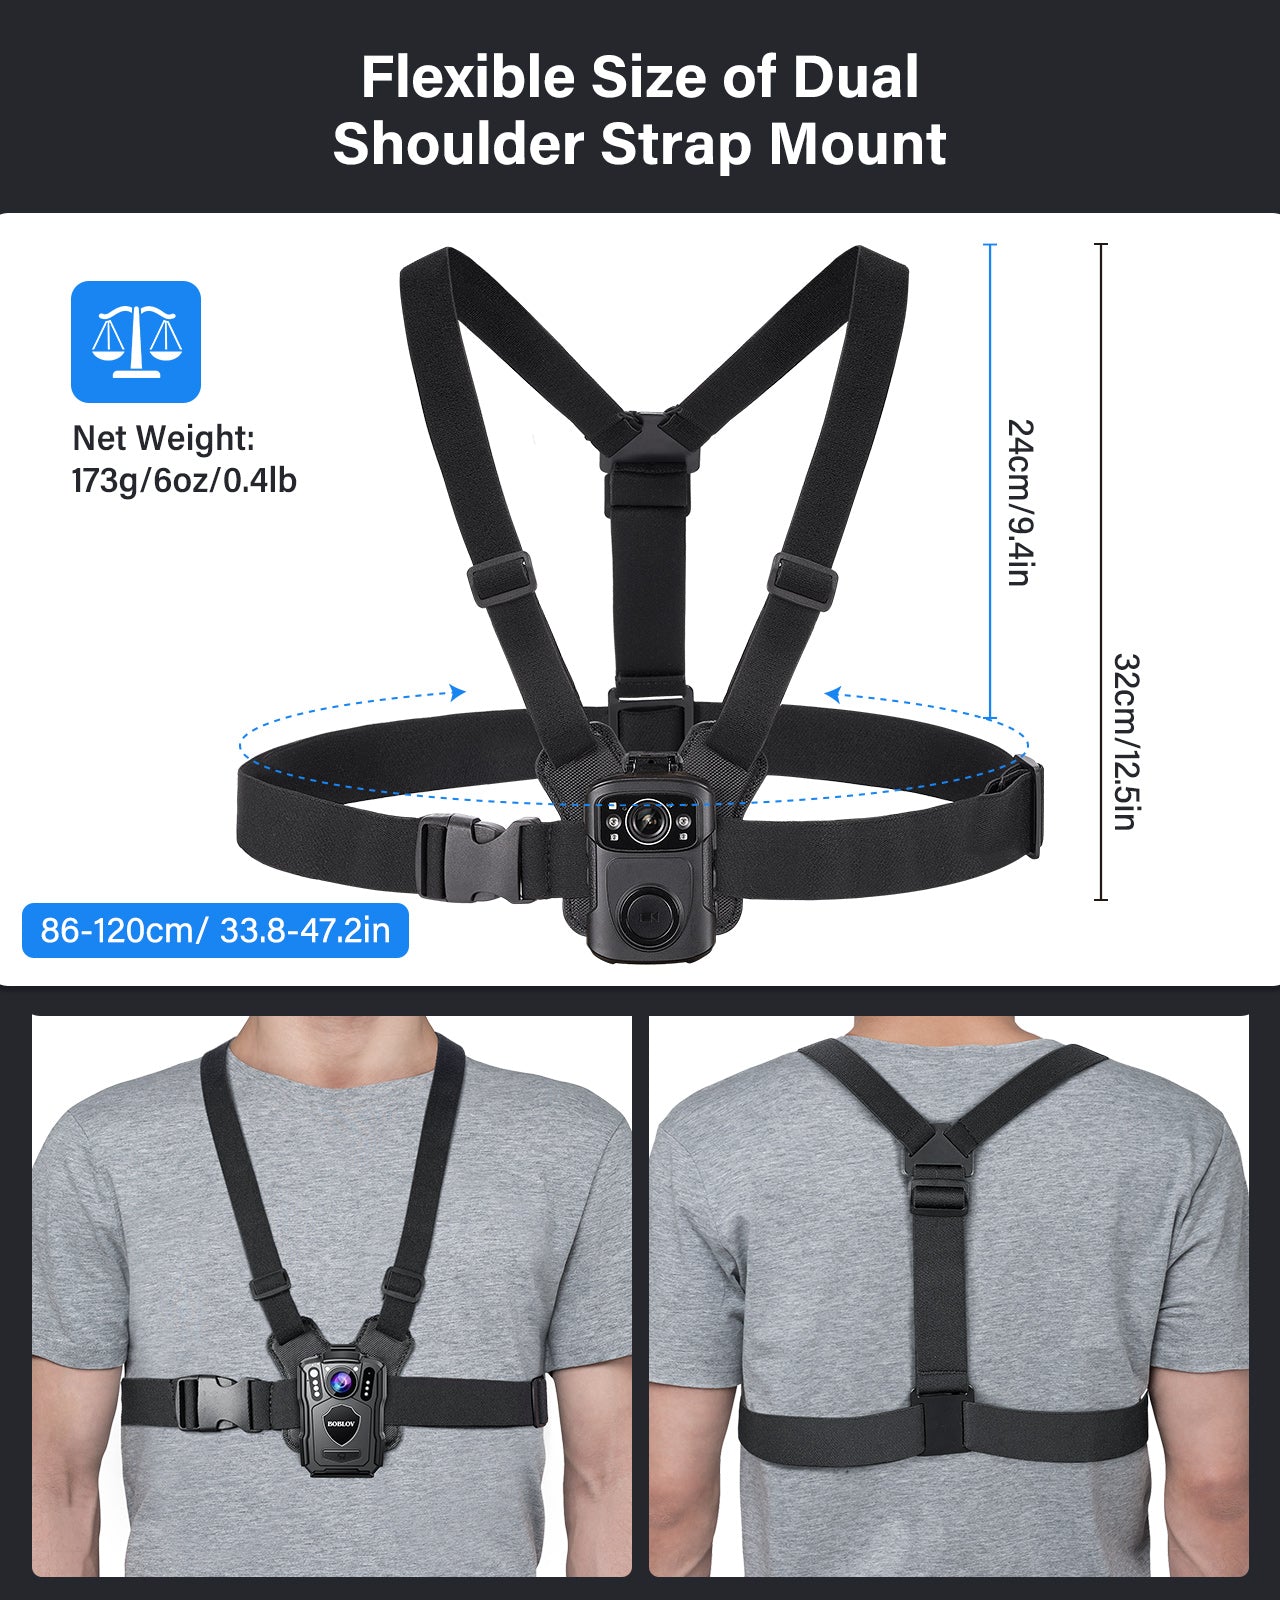 BOBLOV NEW Dual Shoulder Mount, Vest Mount for All Brand Body Camera, Wearable Chest Strap